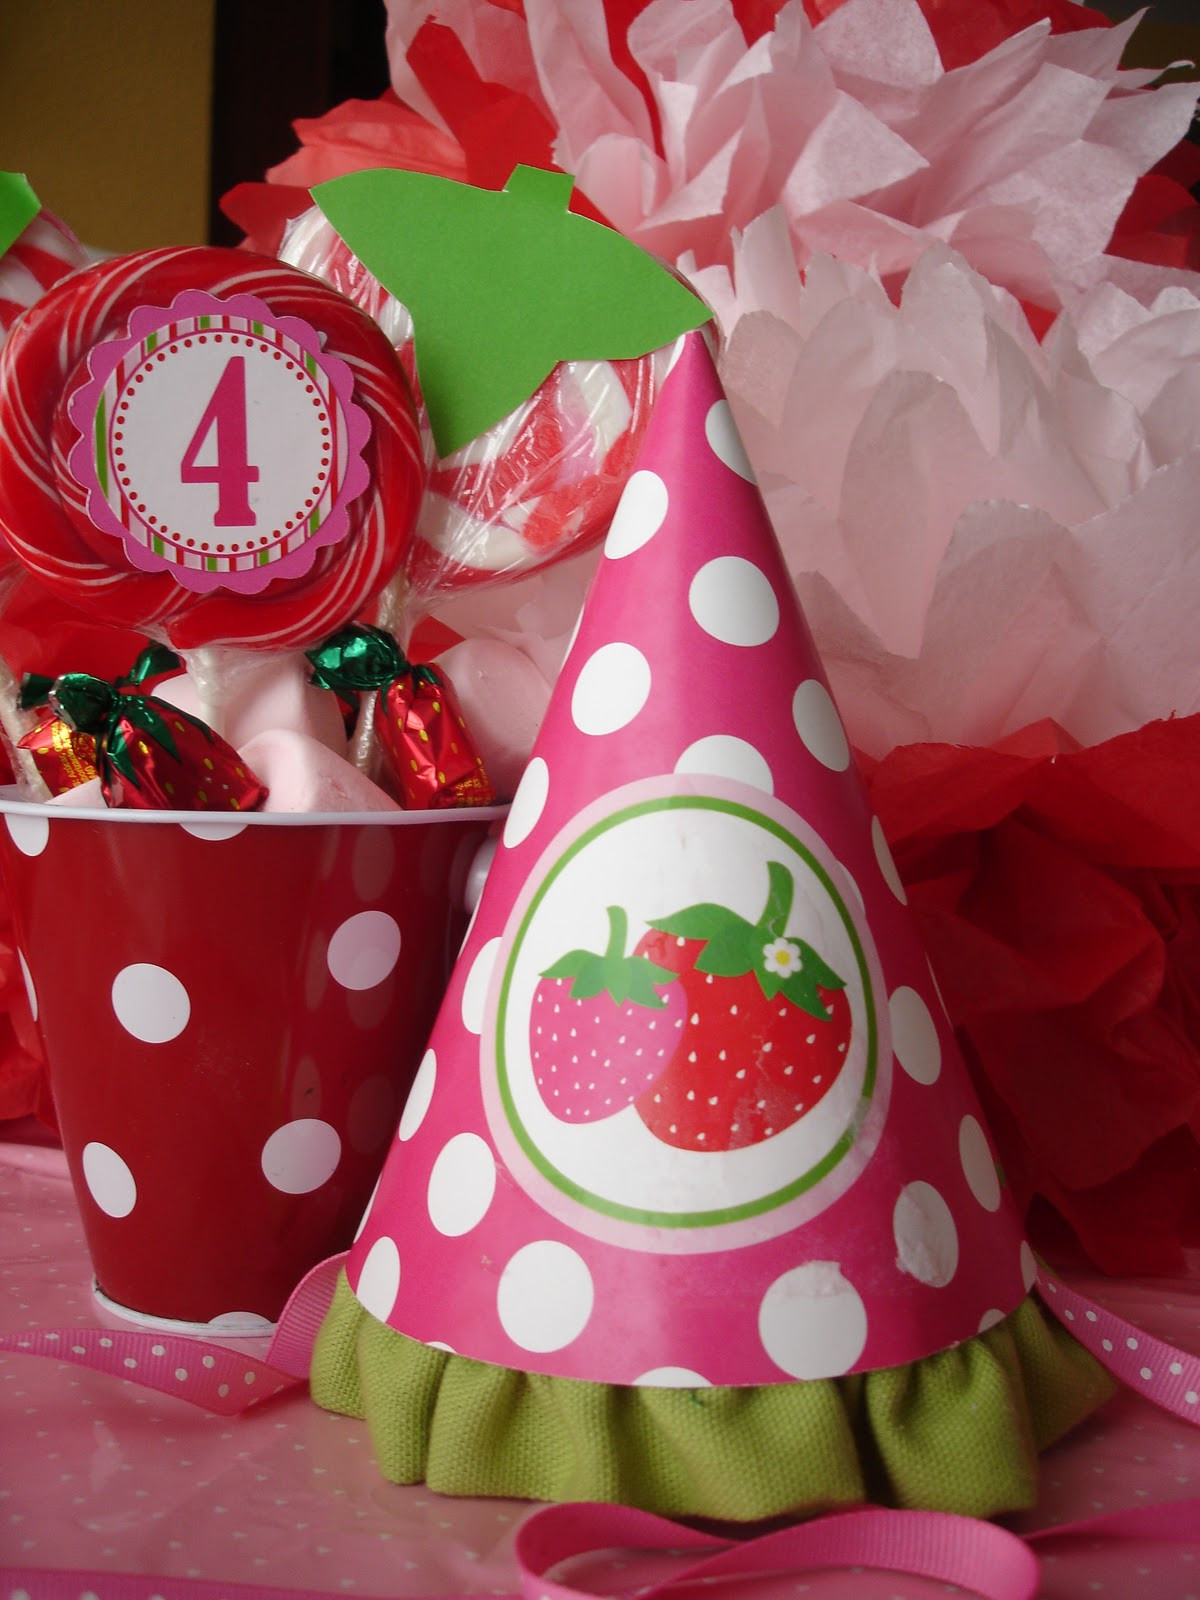 Best ideas about Strawberry Shortcake Birthday Party Ideas
. Save or Pin Strawberry Shortcake Party Now.